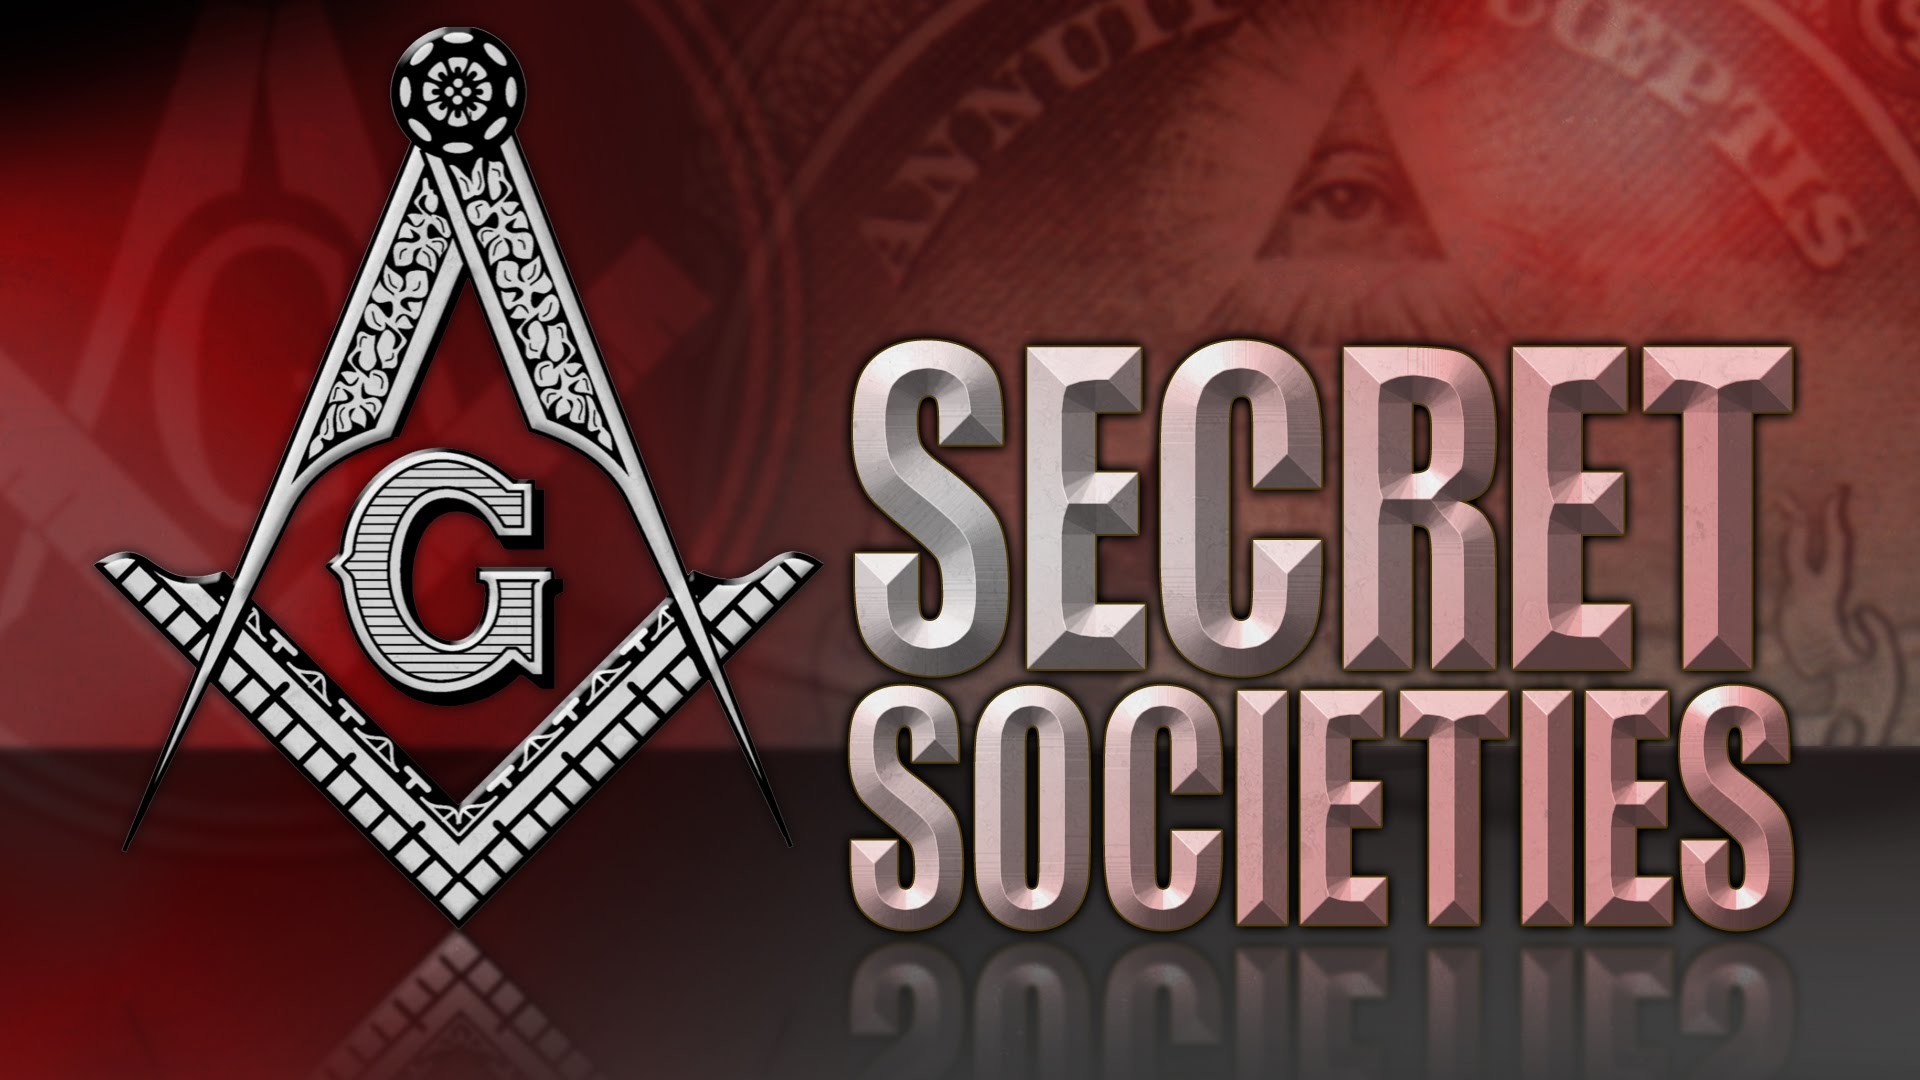 1920x1080 Secret Societies - Full Documentary - HD - Illuminati - Freemasonry -  YouTube